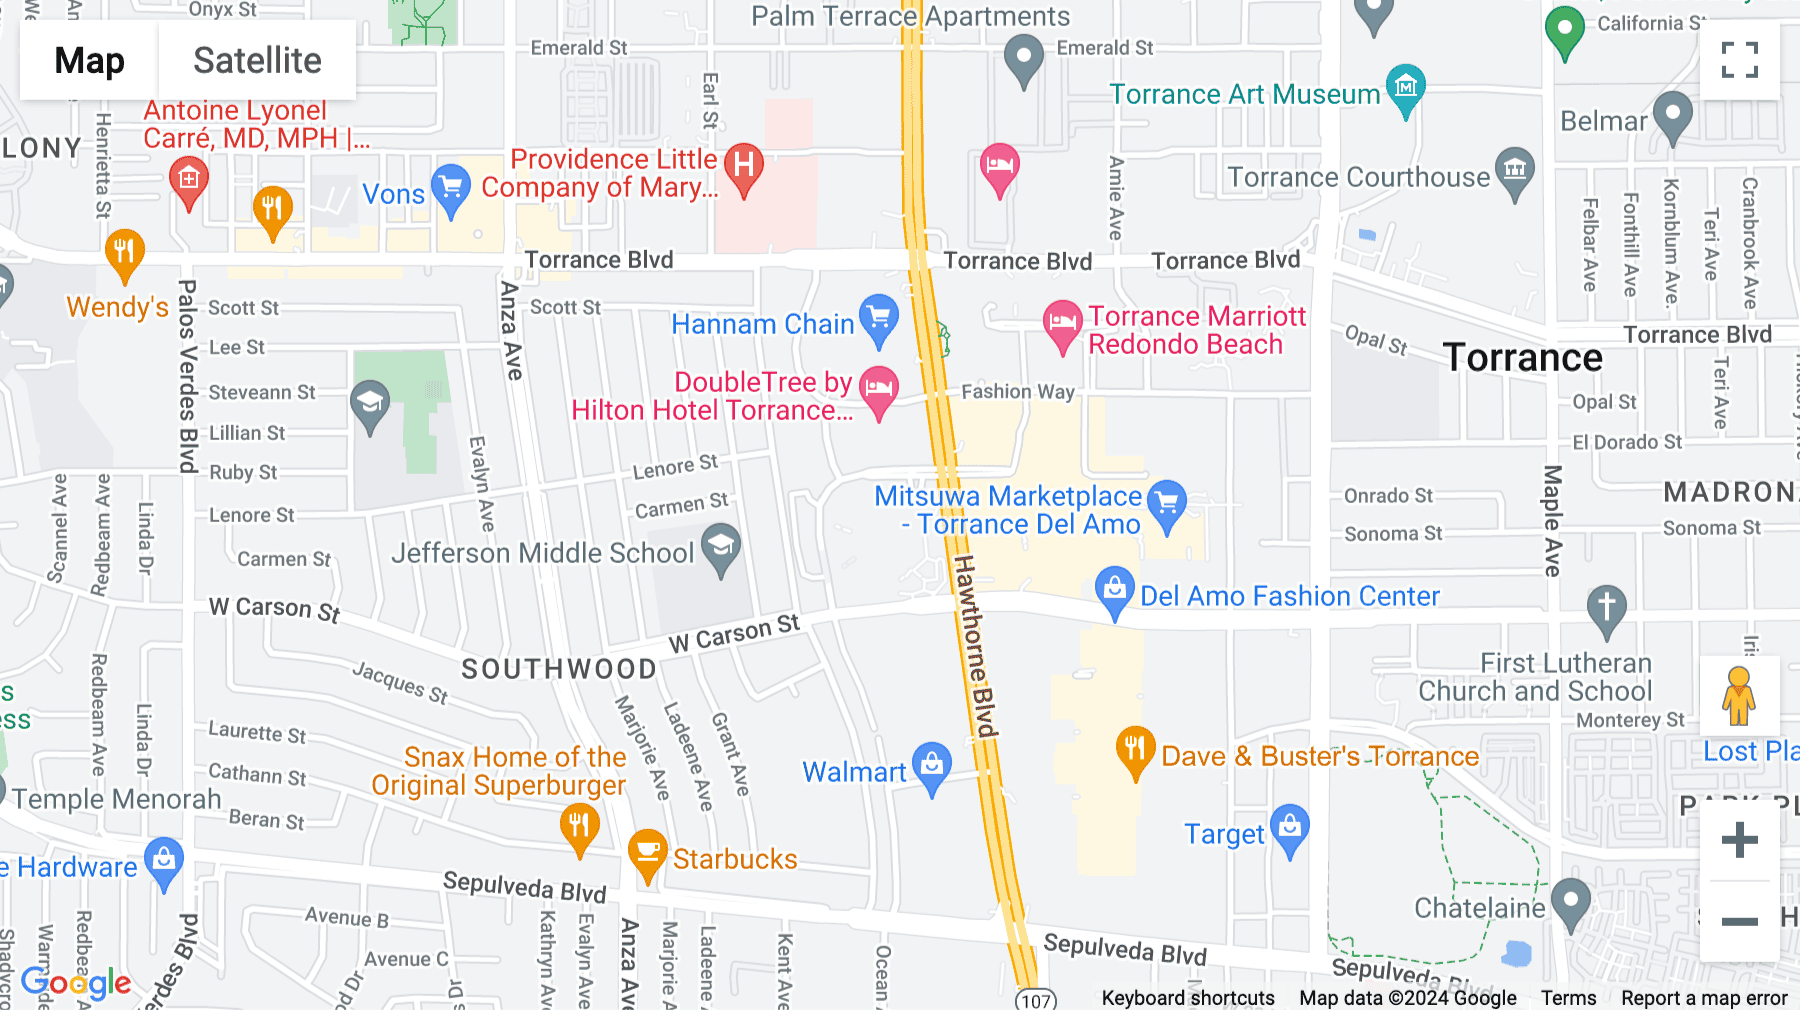 Click for interative map of 21515 Hawthorne Blvd., Suite 200, Del Amo Financial Centre, Torrance